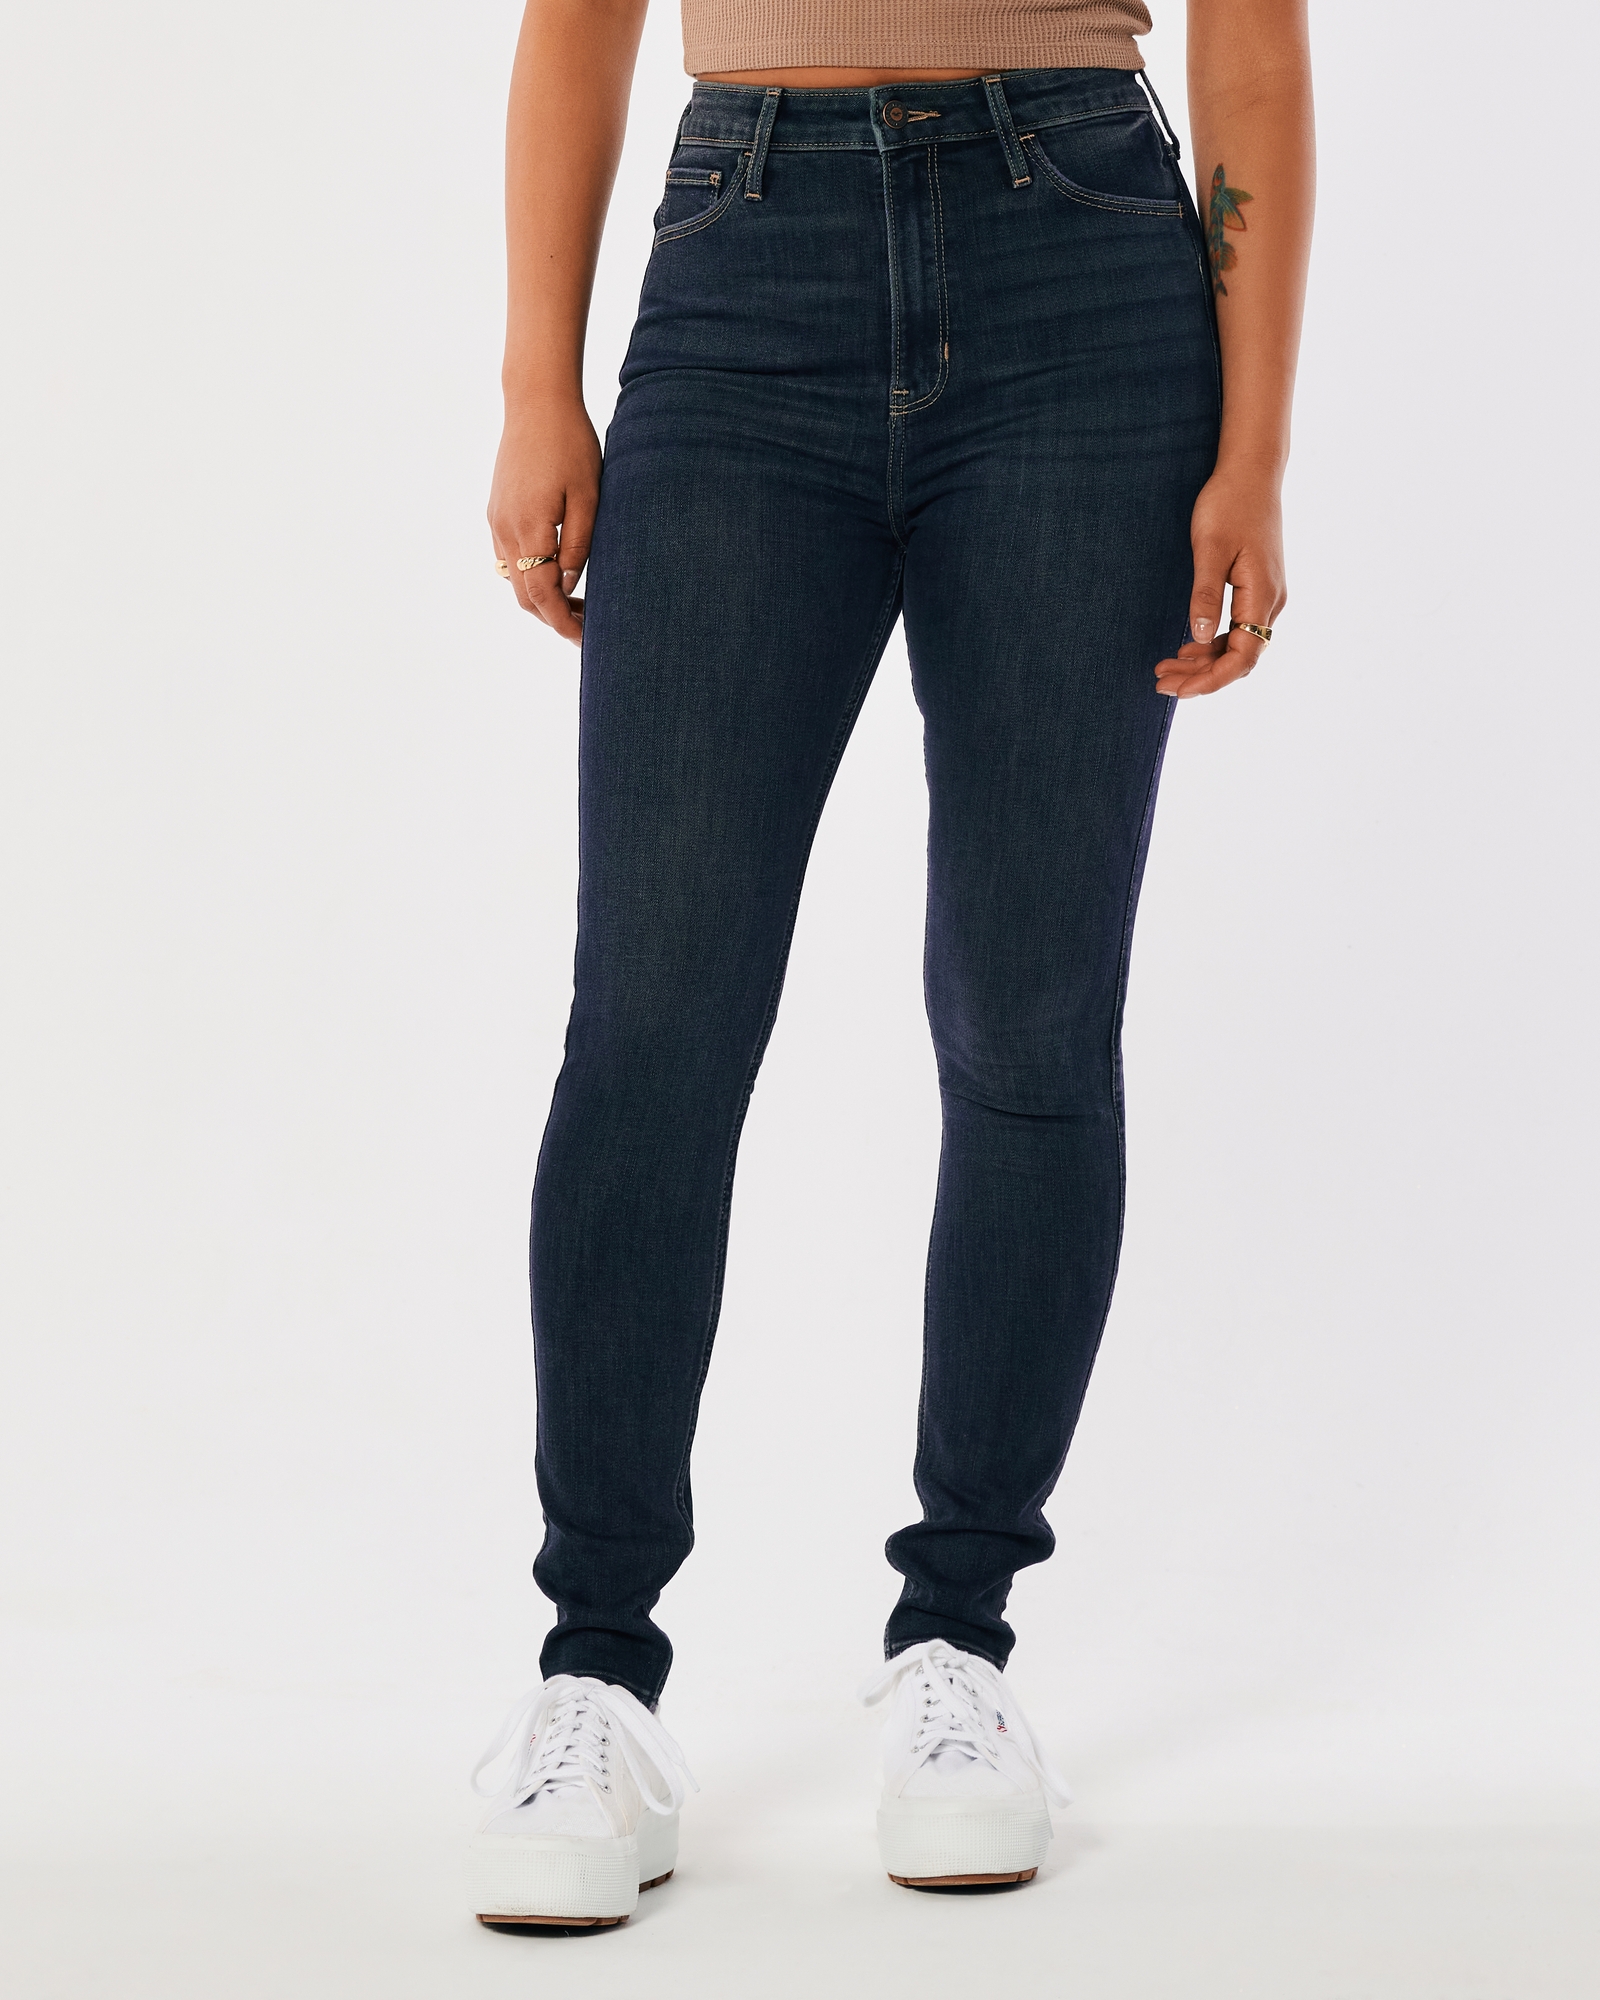 Women's Ultra High-Rise Black Super Skinny Jeans